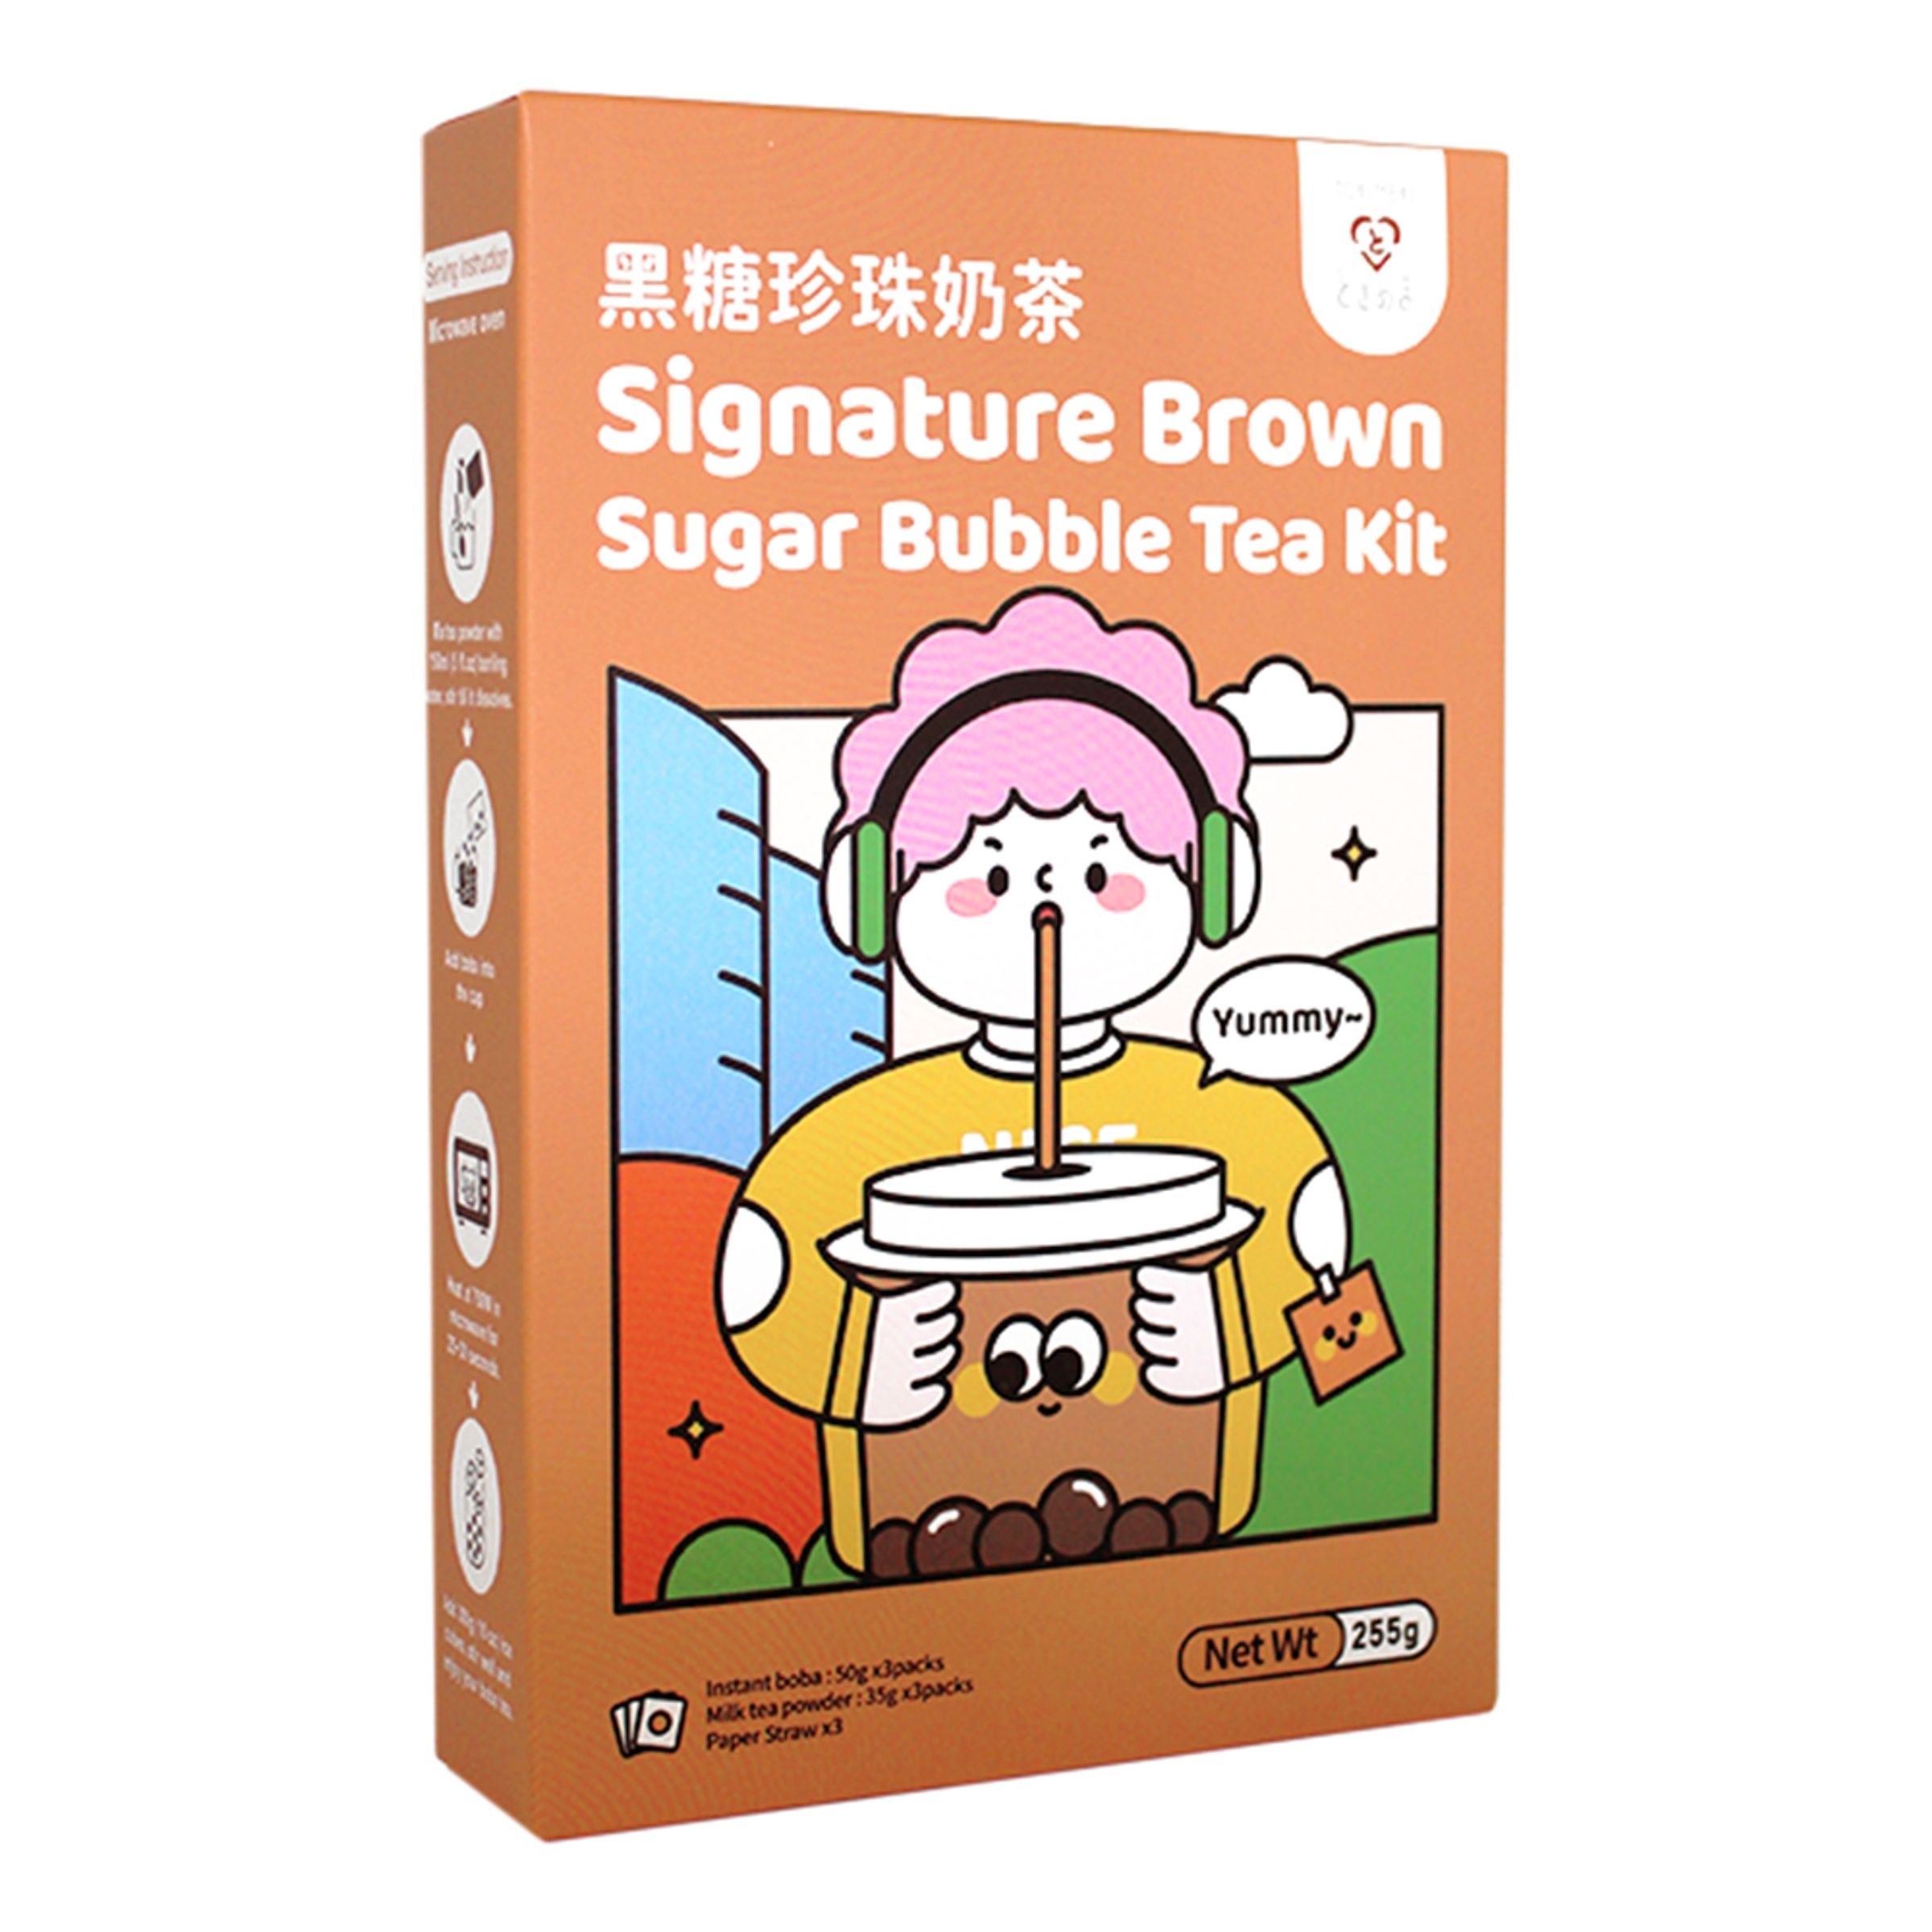 Tokimeki Brown Sugar Bubble Tea Kit - 3-pack